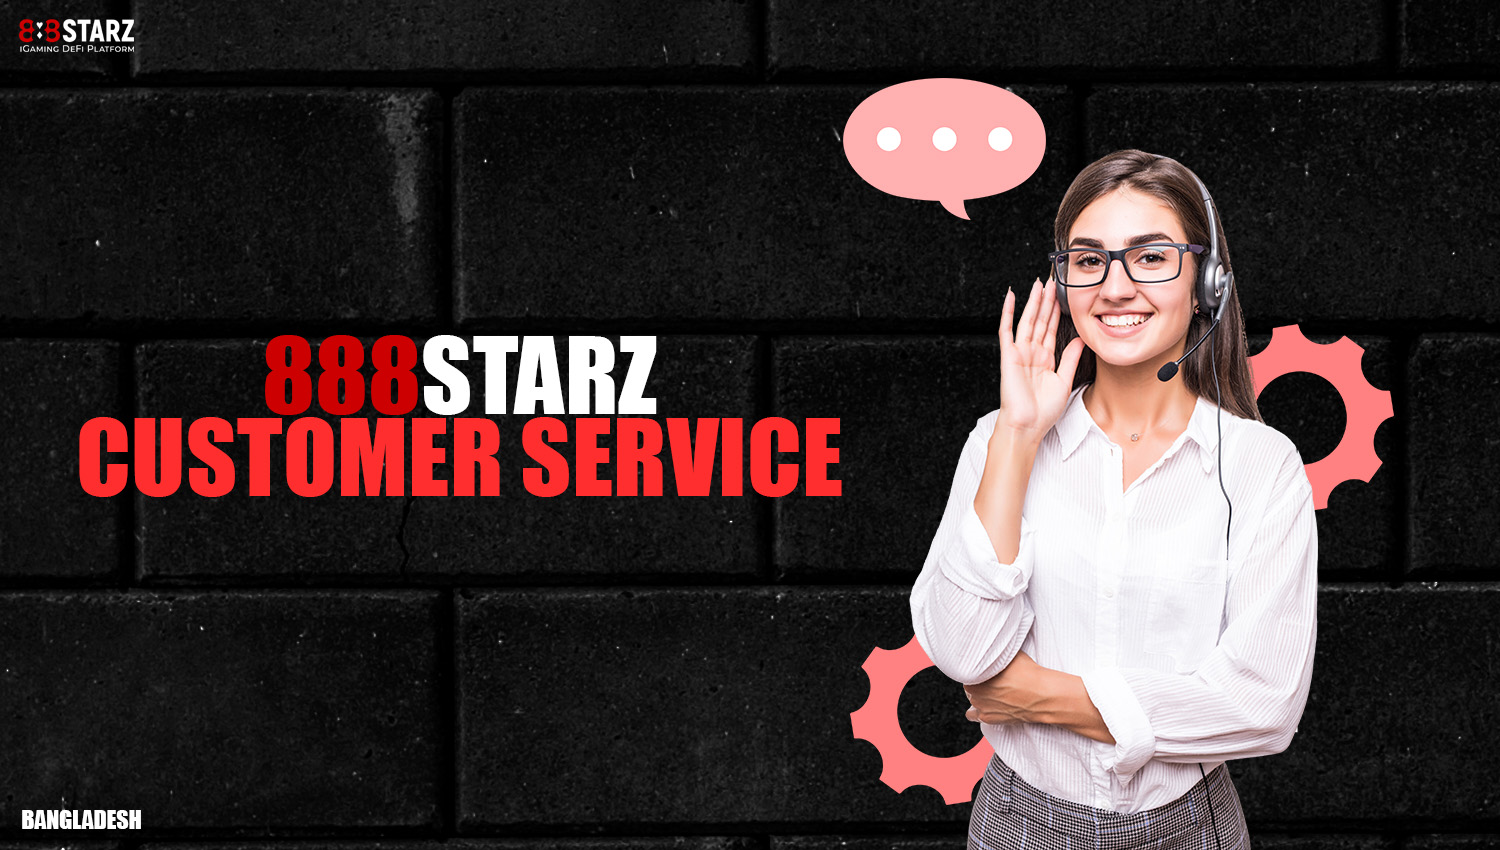 888starz 24/7 customer support service